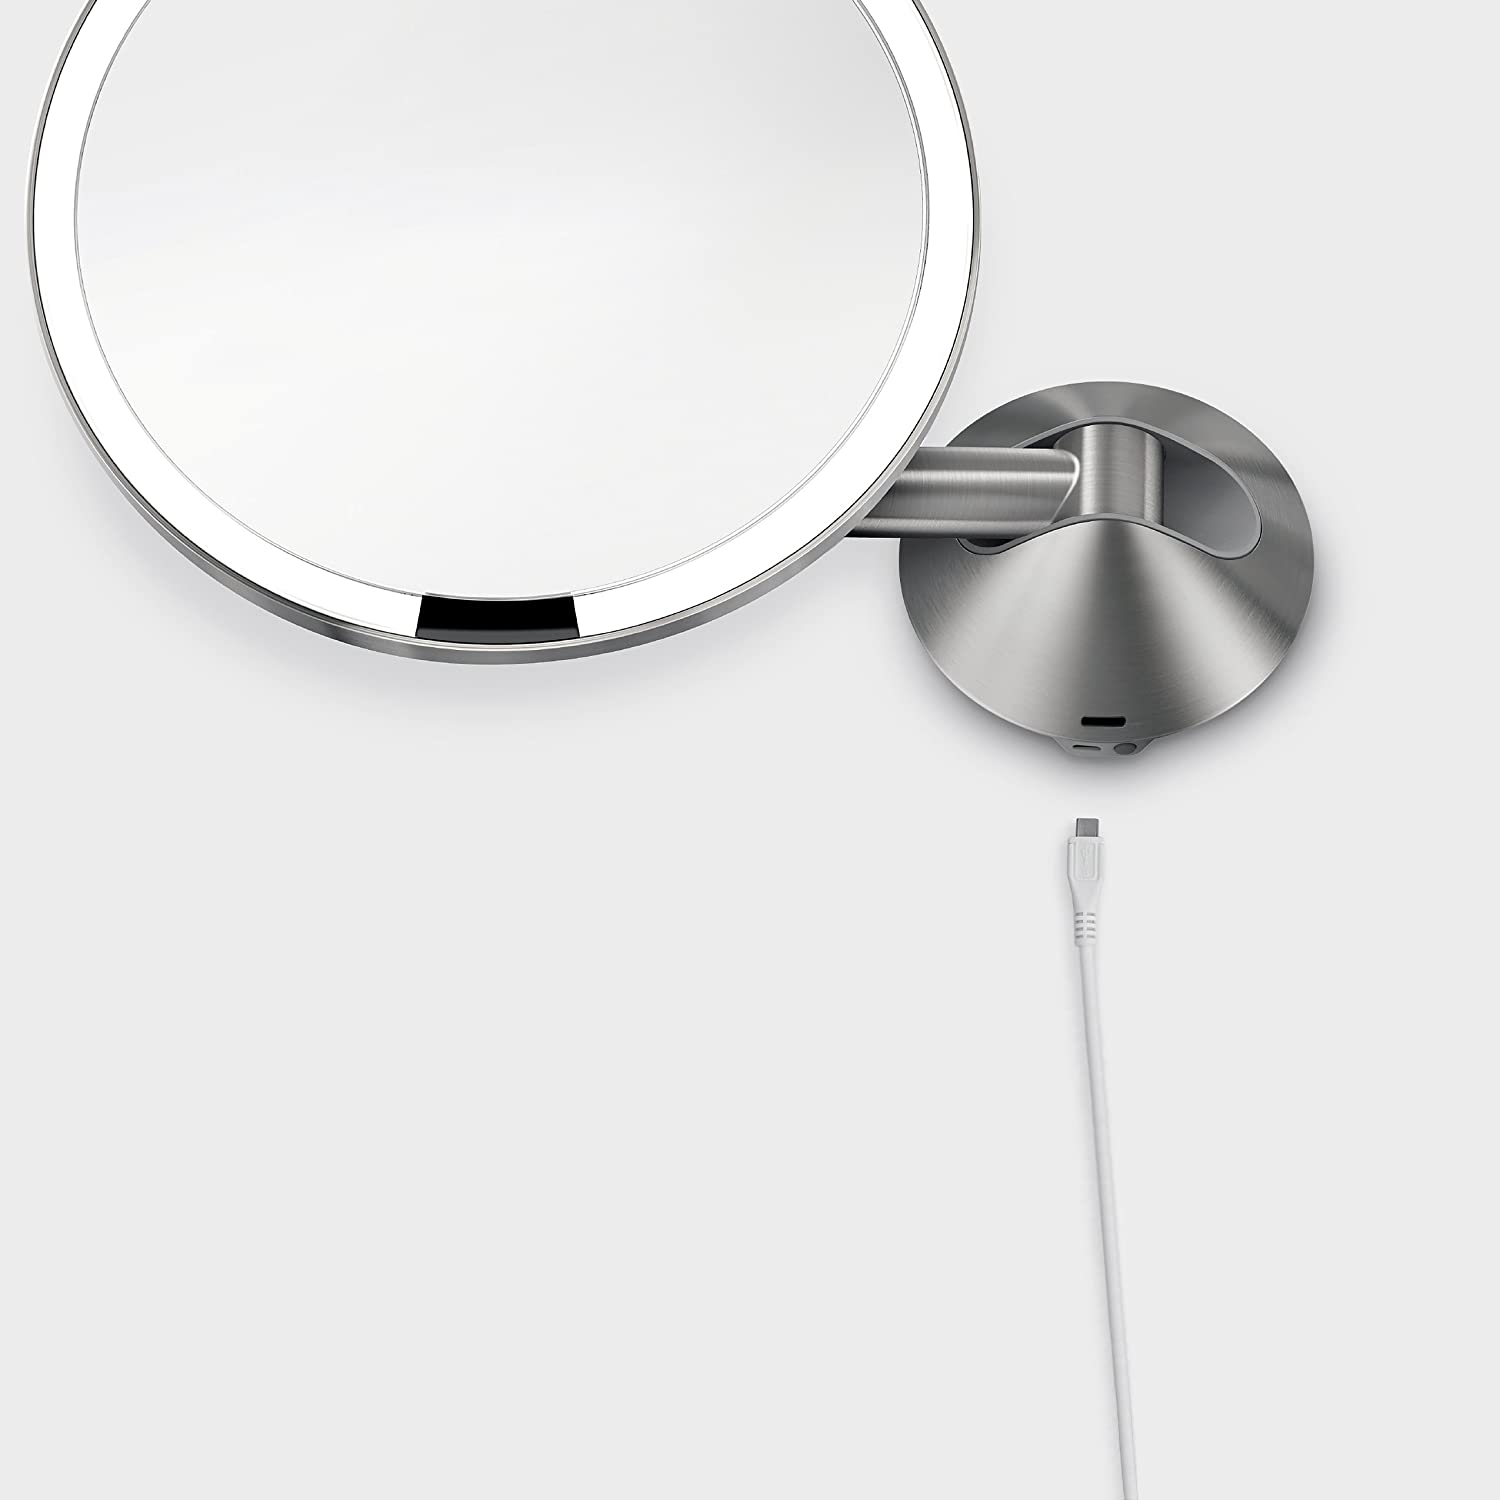 Simplehuman Wall Mounted Sensor Mirror (ST3002) - Brushed Stainless Steel